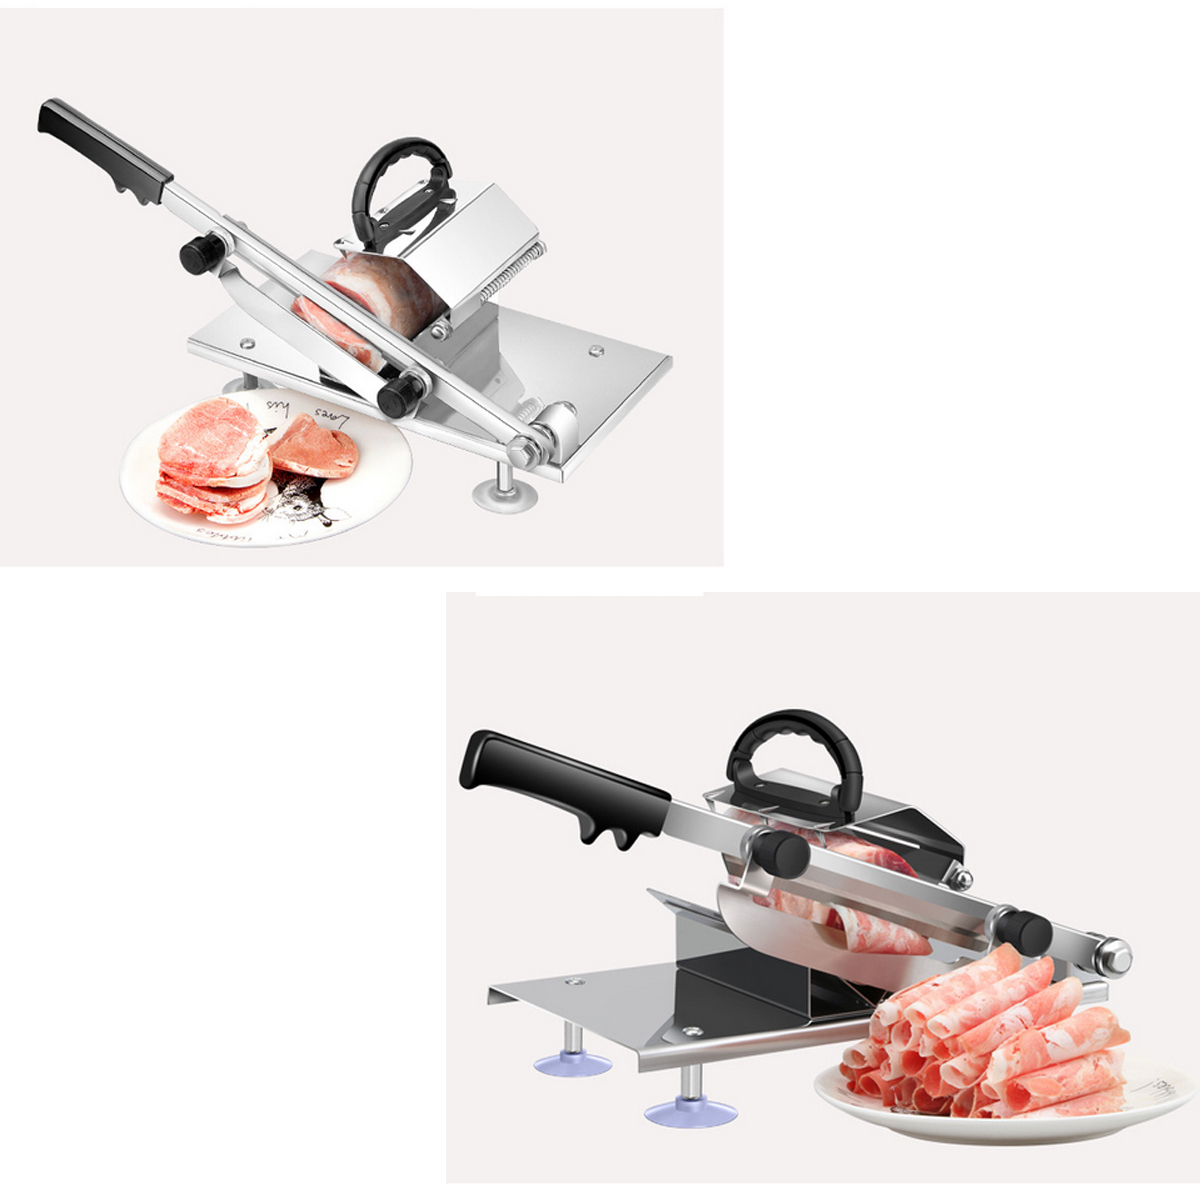 

Household Meat Slicer Manual Frozen Meat Slicer Cutter Beef Mutton Sheet Slicing Machine